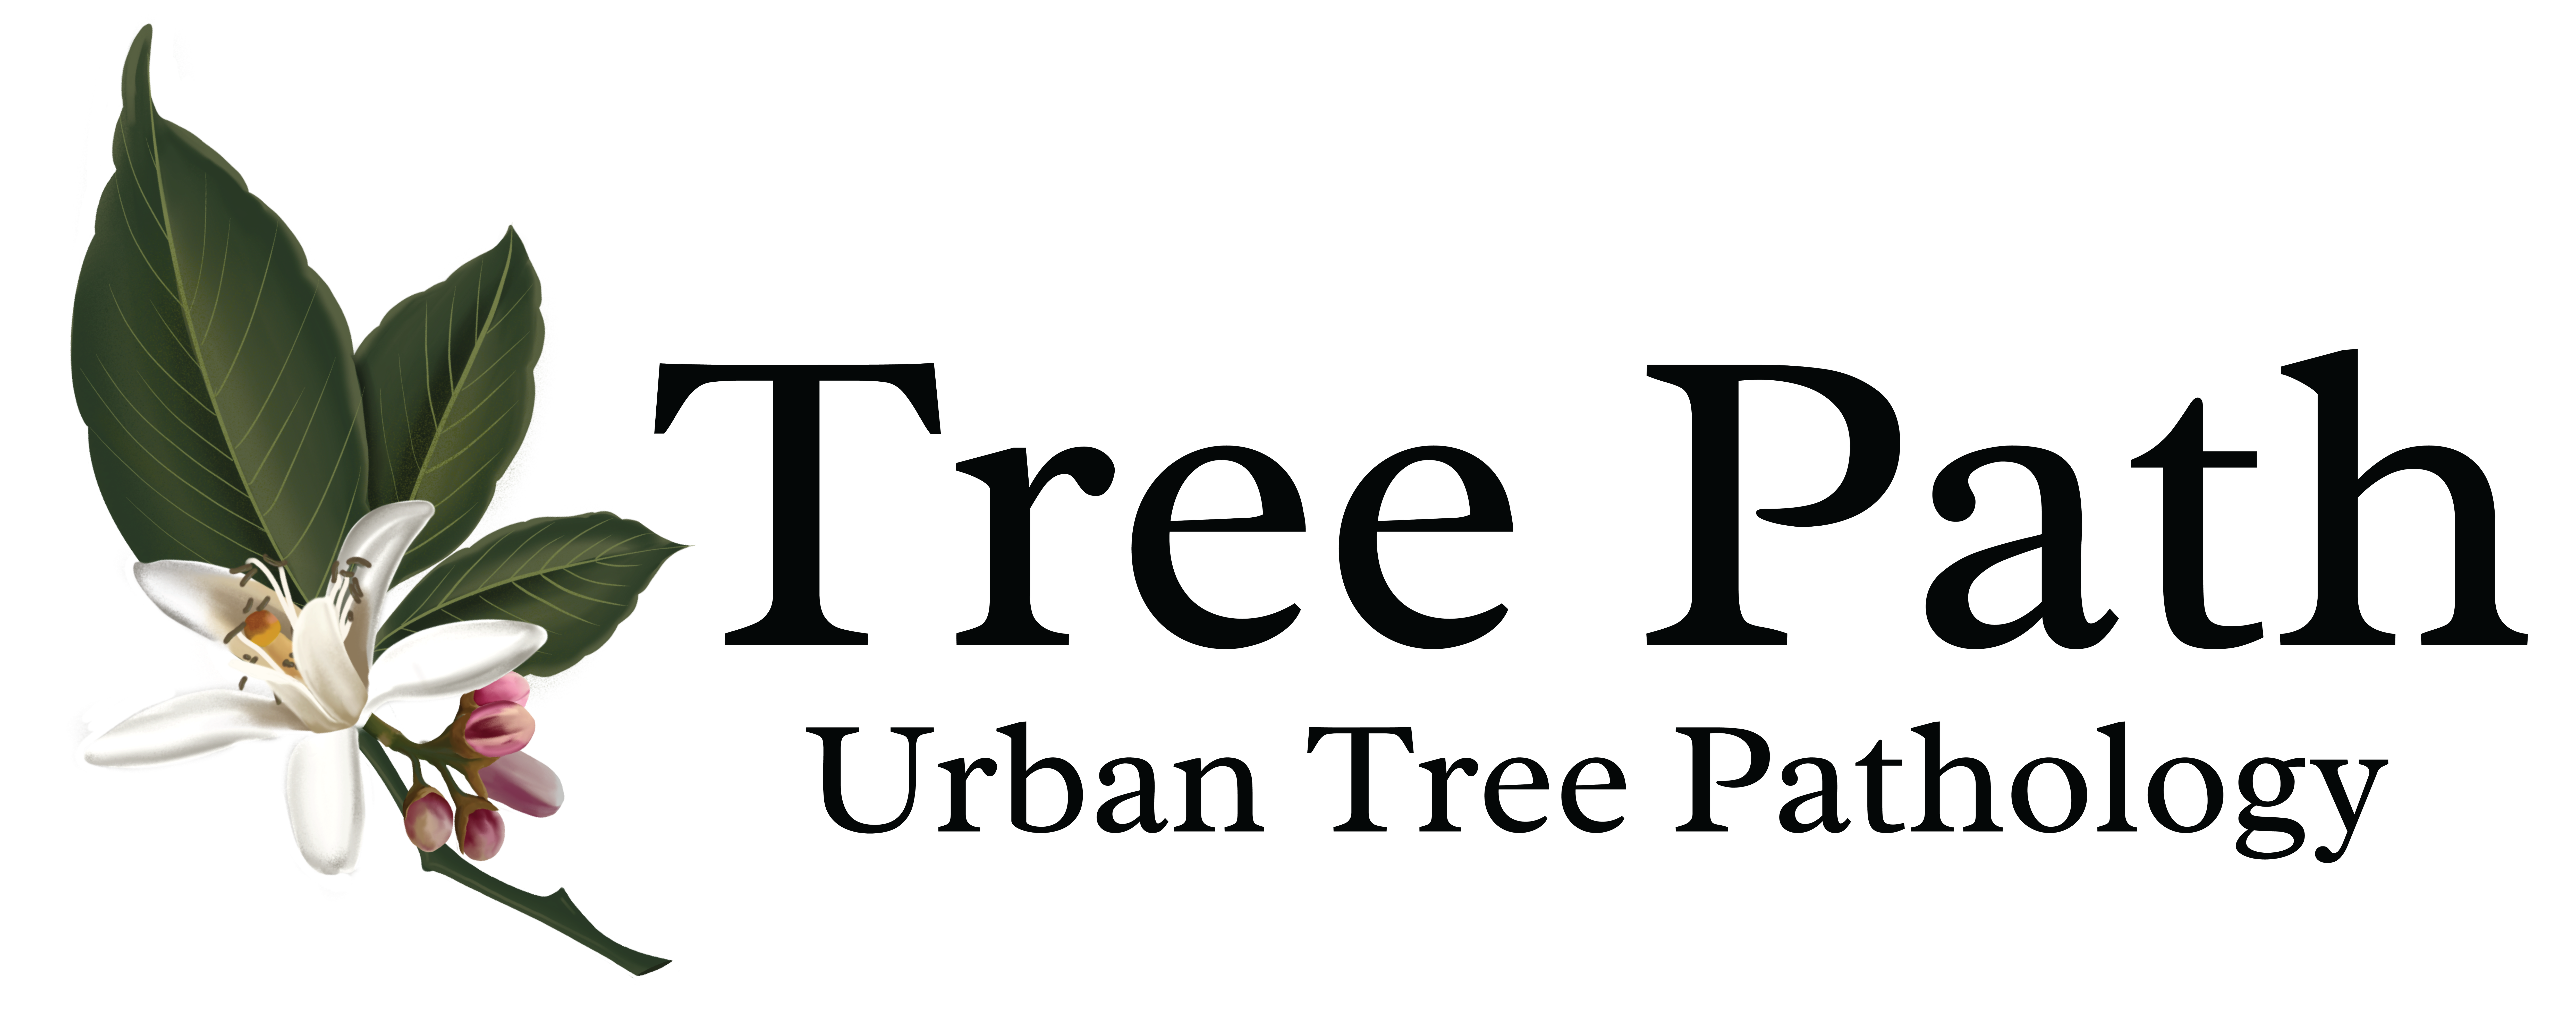 Tree Path | Urban Tree Pathology